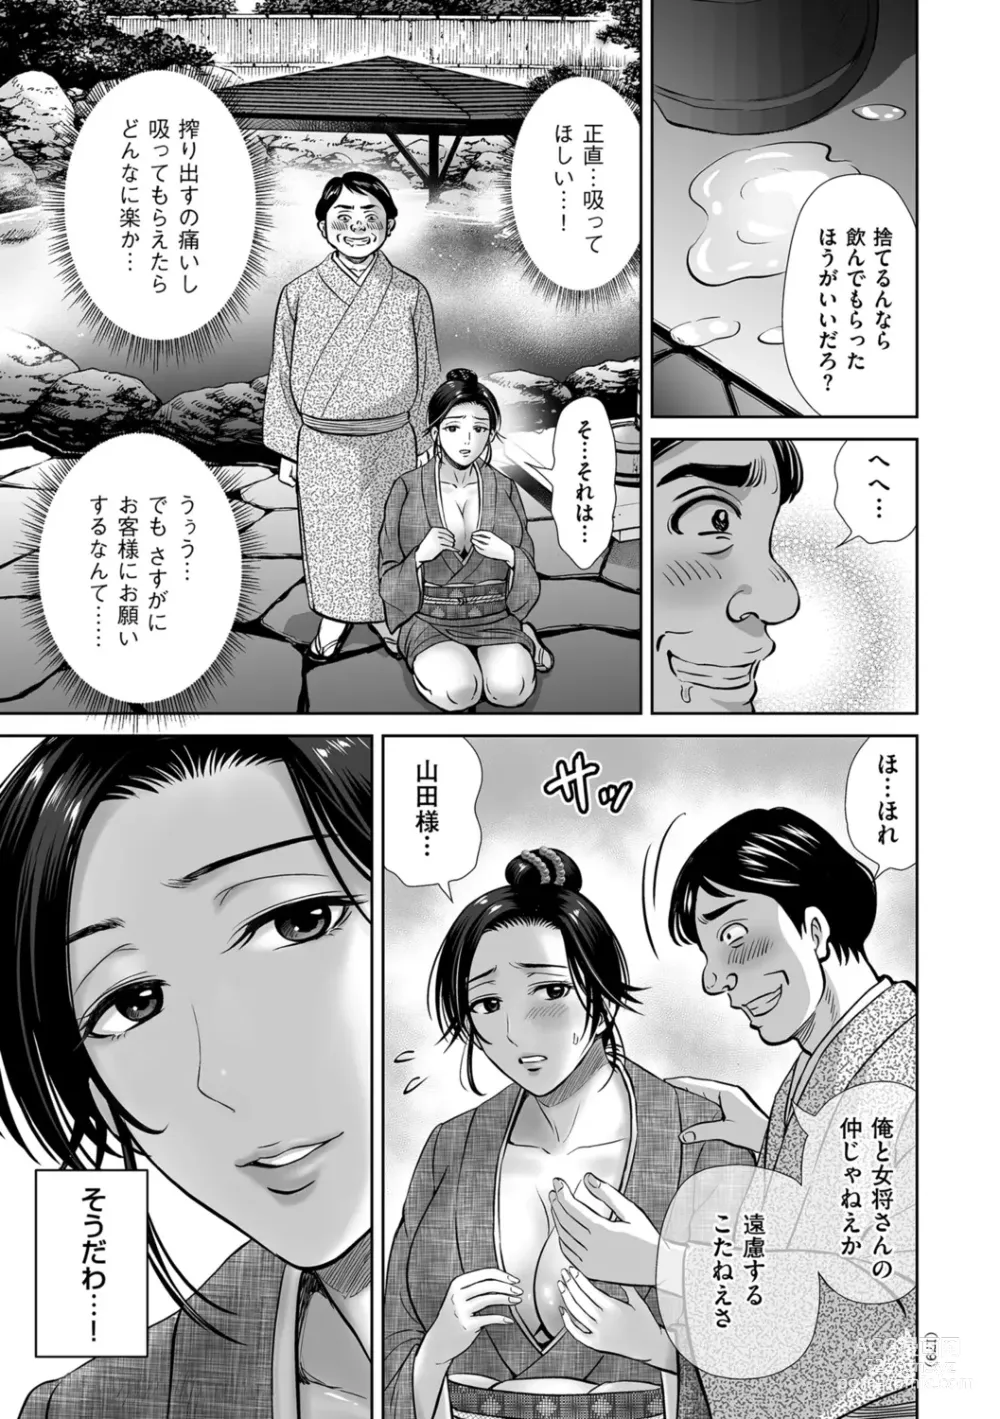 Page 179 of manga Mesuzakari no Haha-tachi e